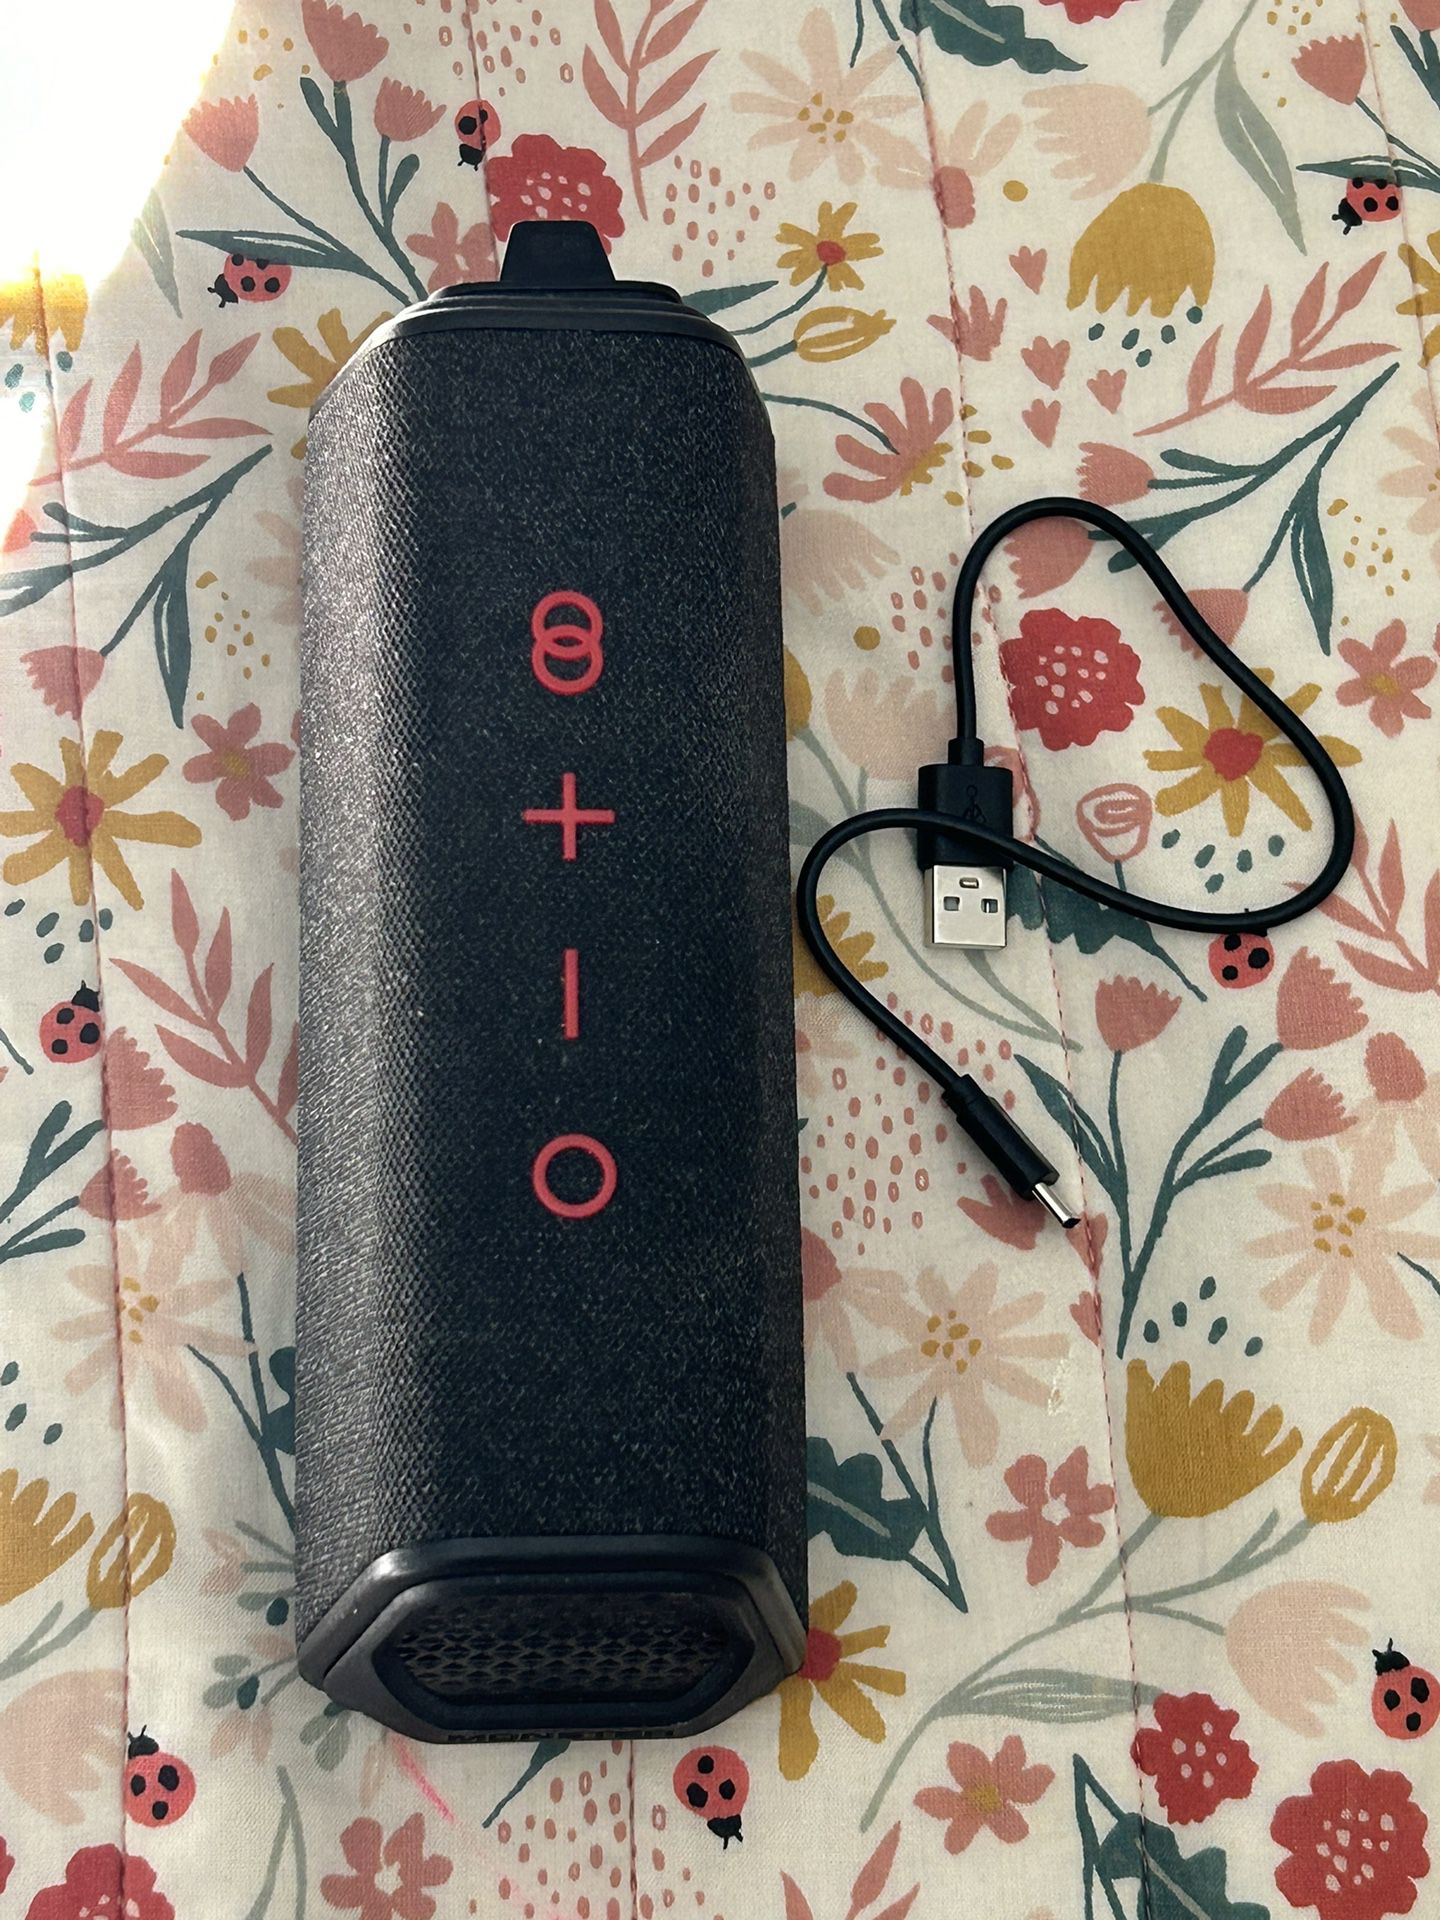 Portable Black Bluetooth Speaker